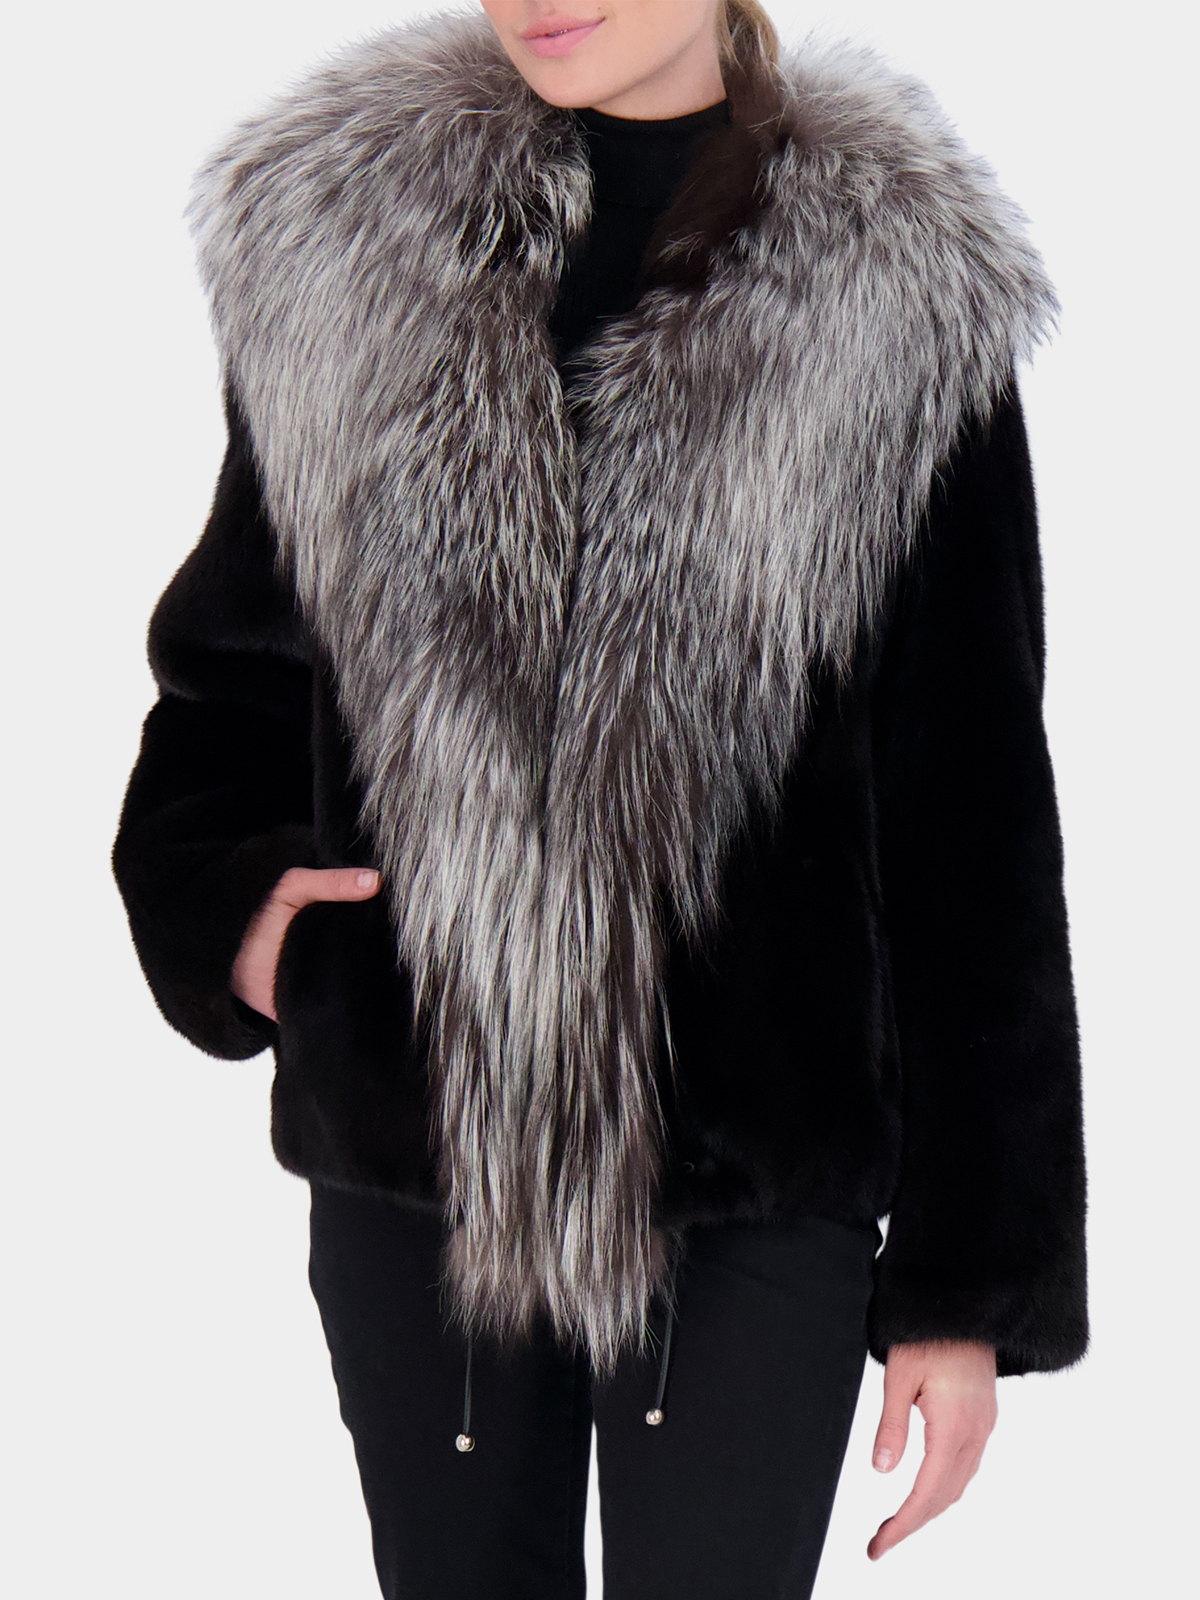 Fox Fur Jacket  Women's Real Fox Fur Jacket